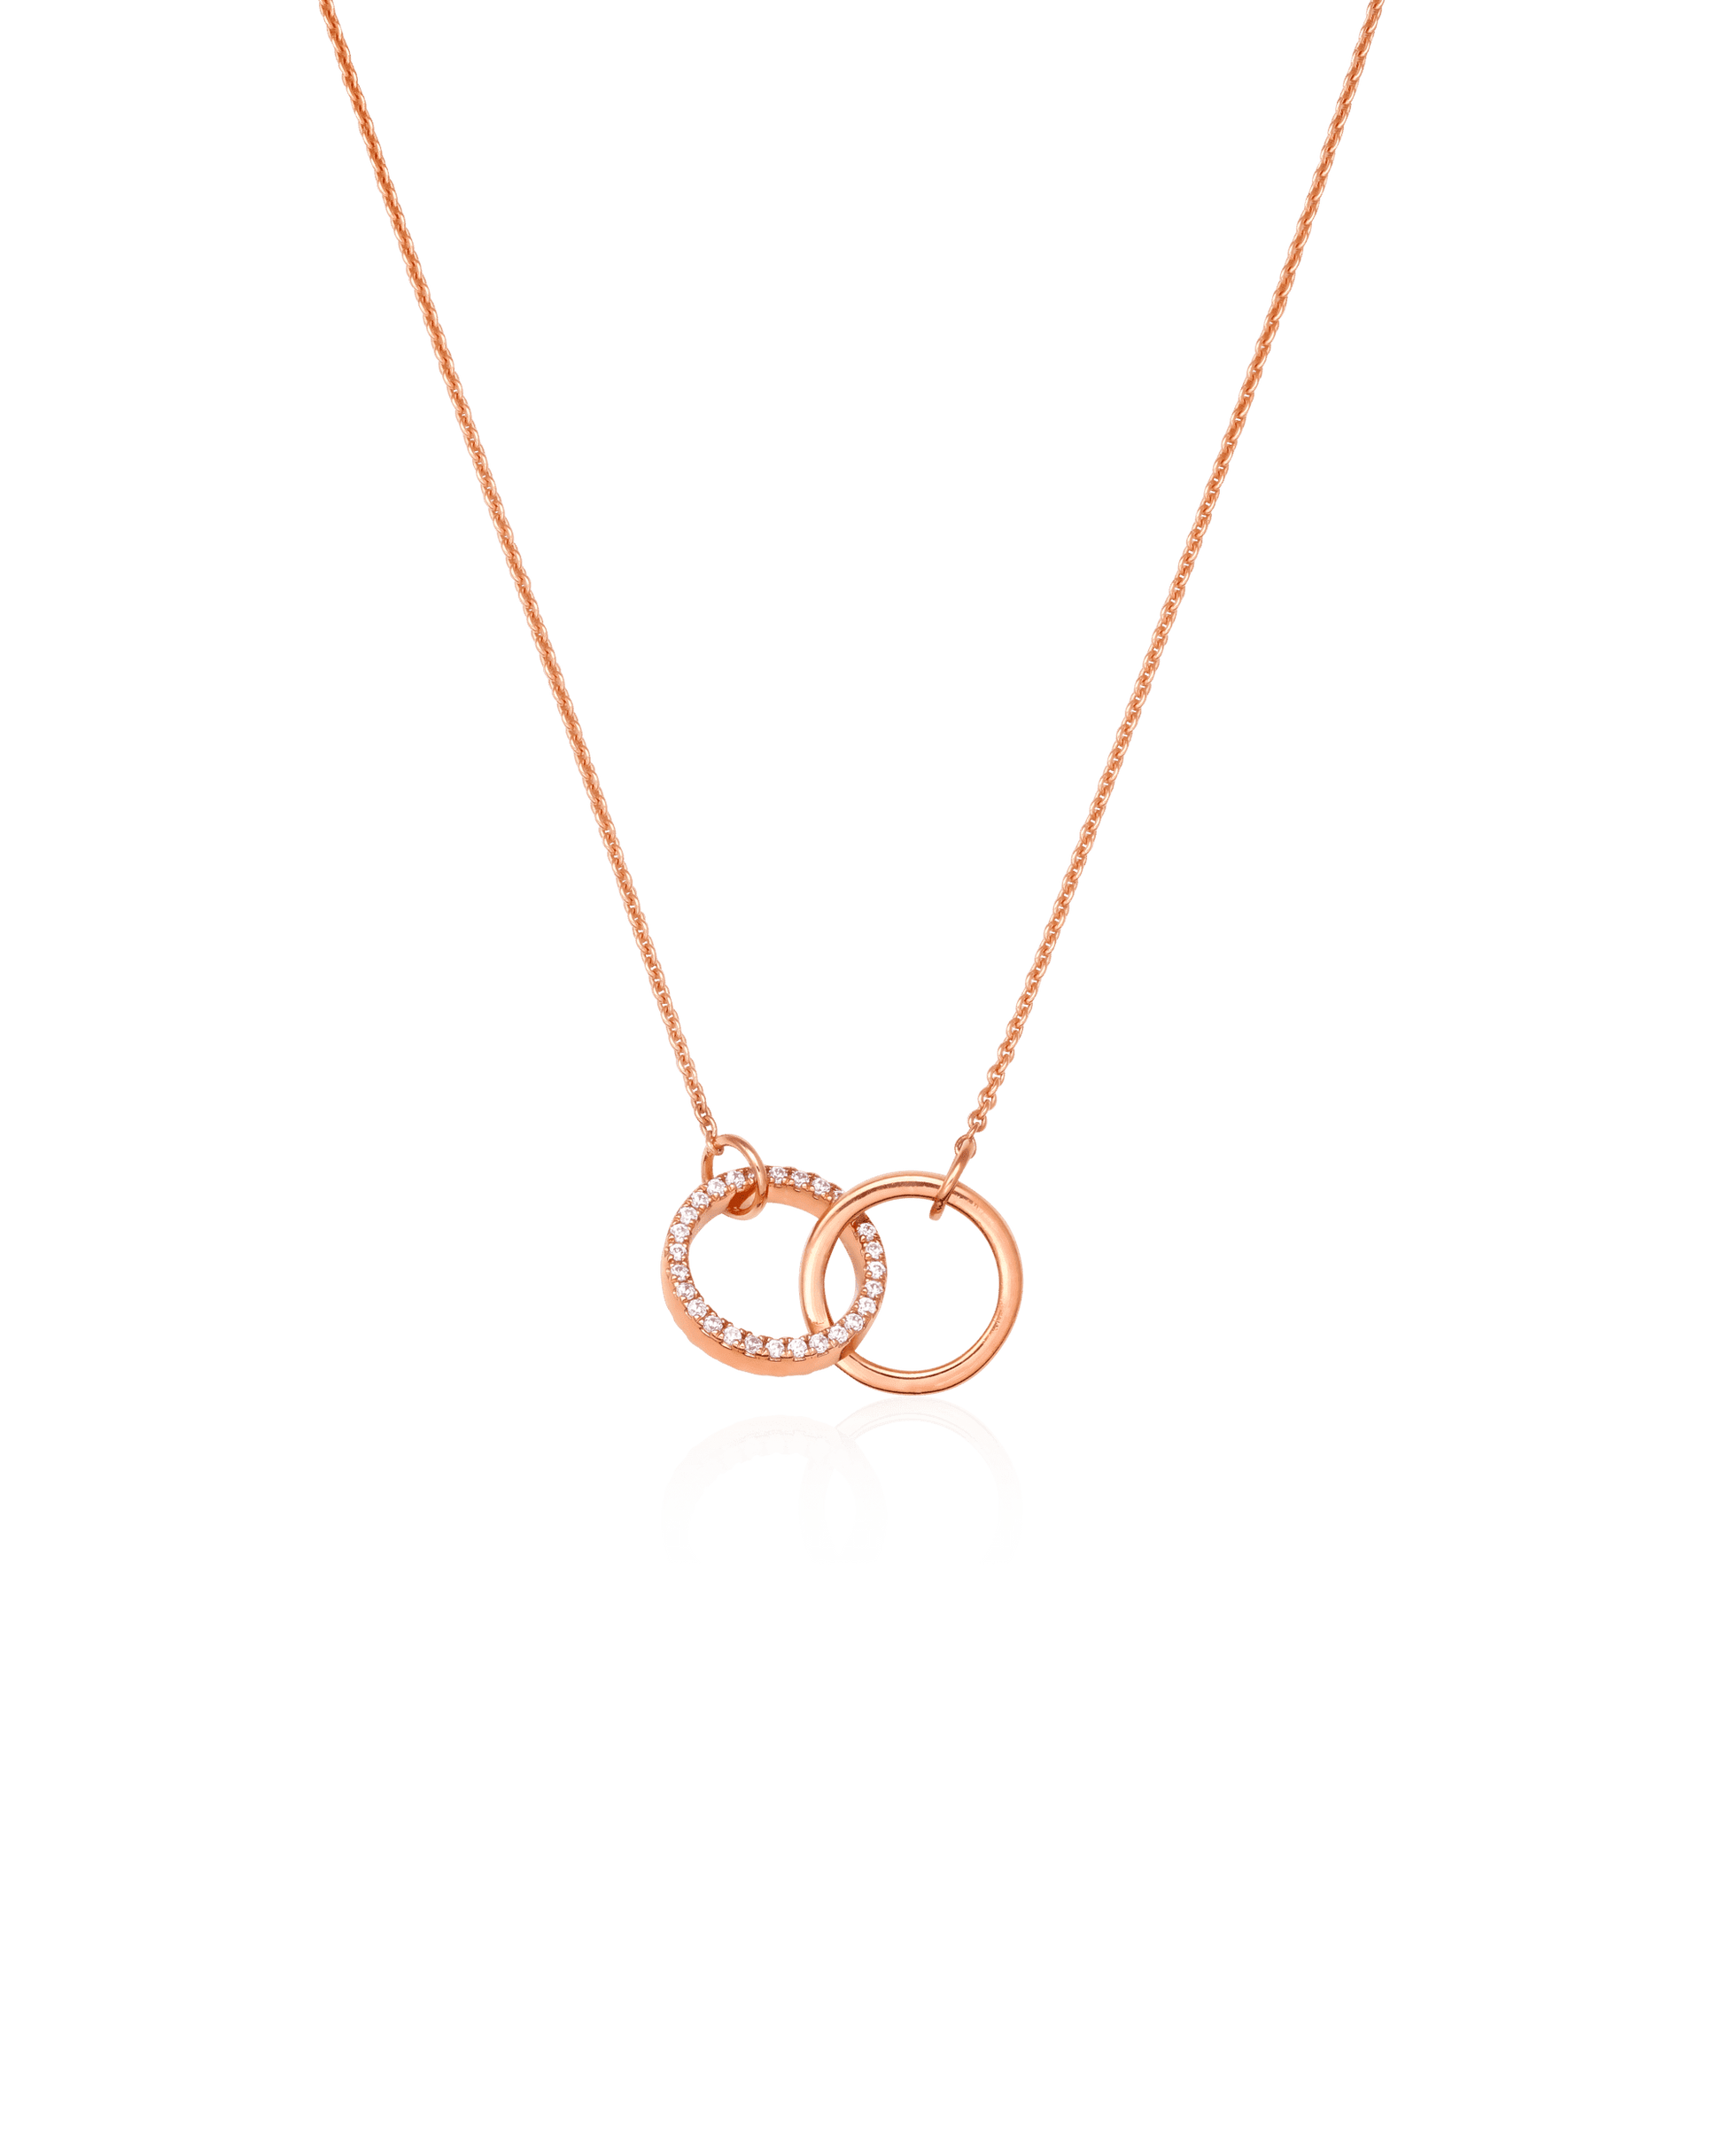 Interlocking Necklace - 18K Rose Vermeil Necklaces magal-dev Small 14"- 16" 